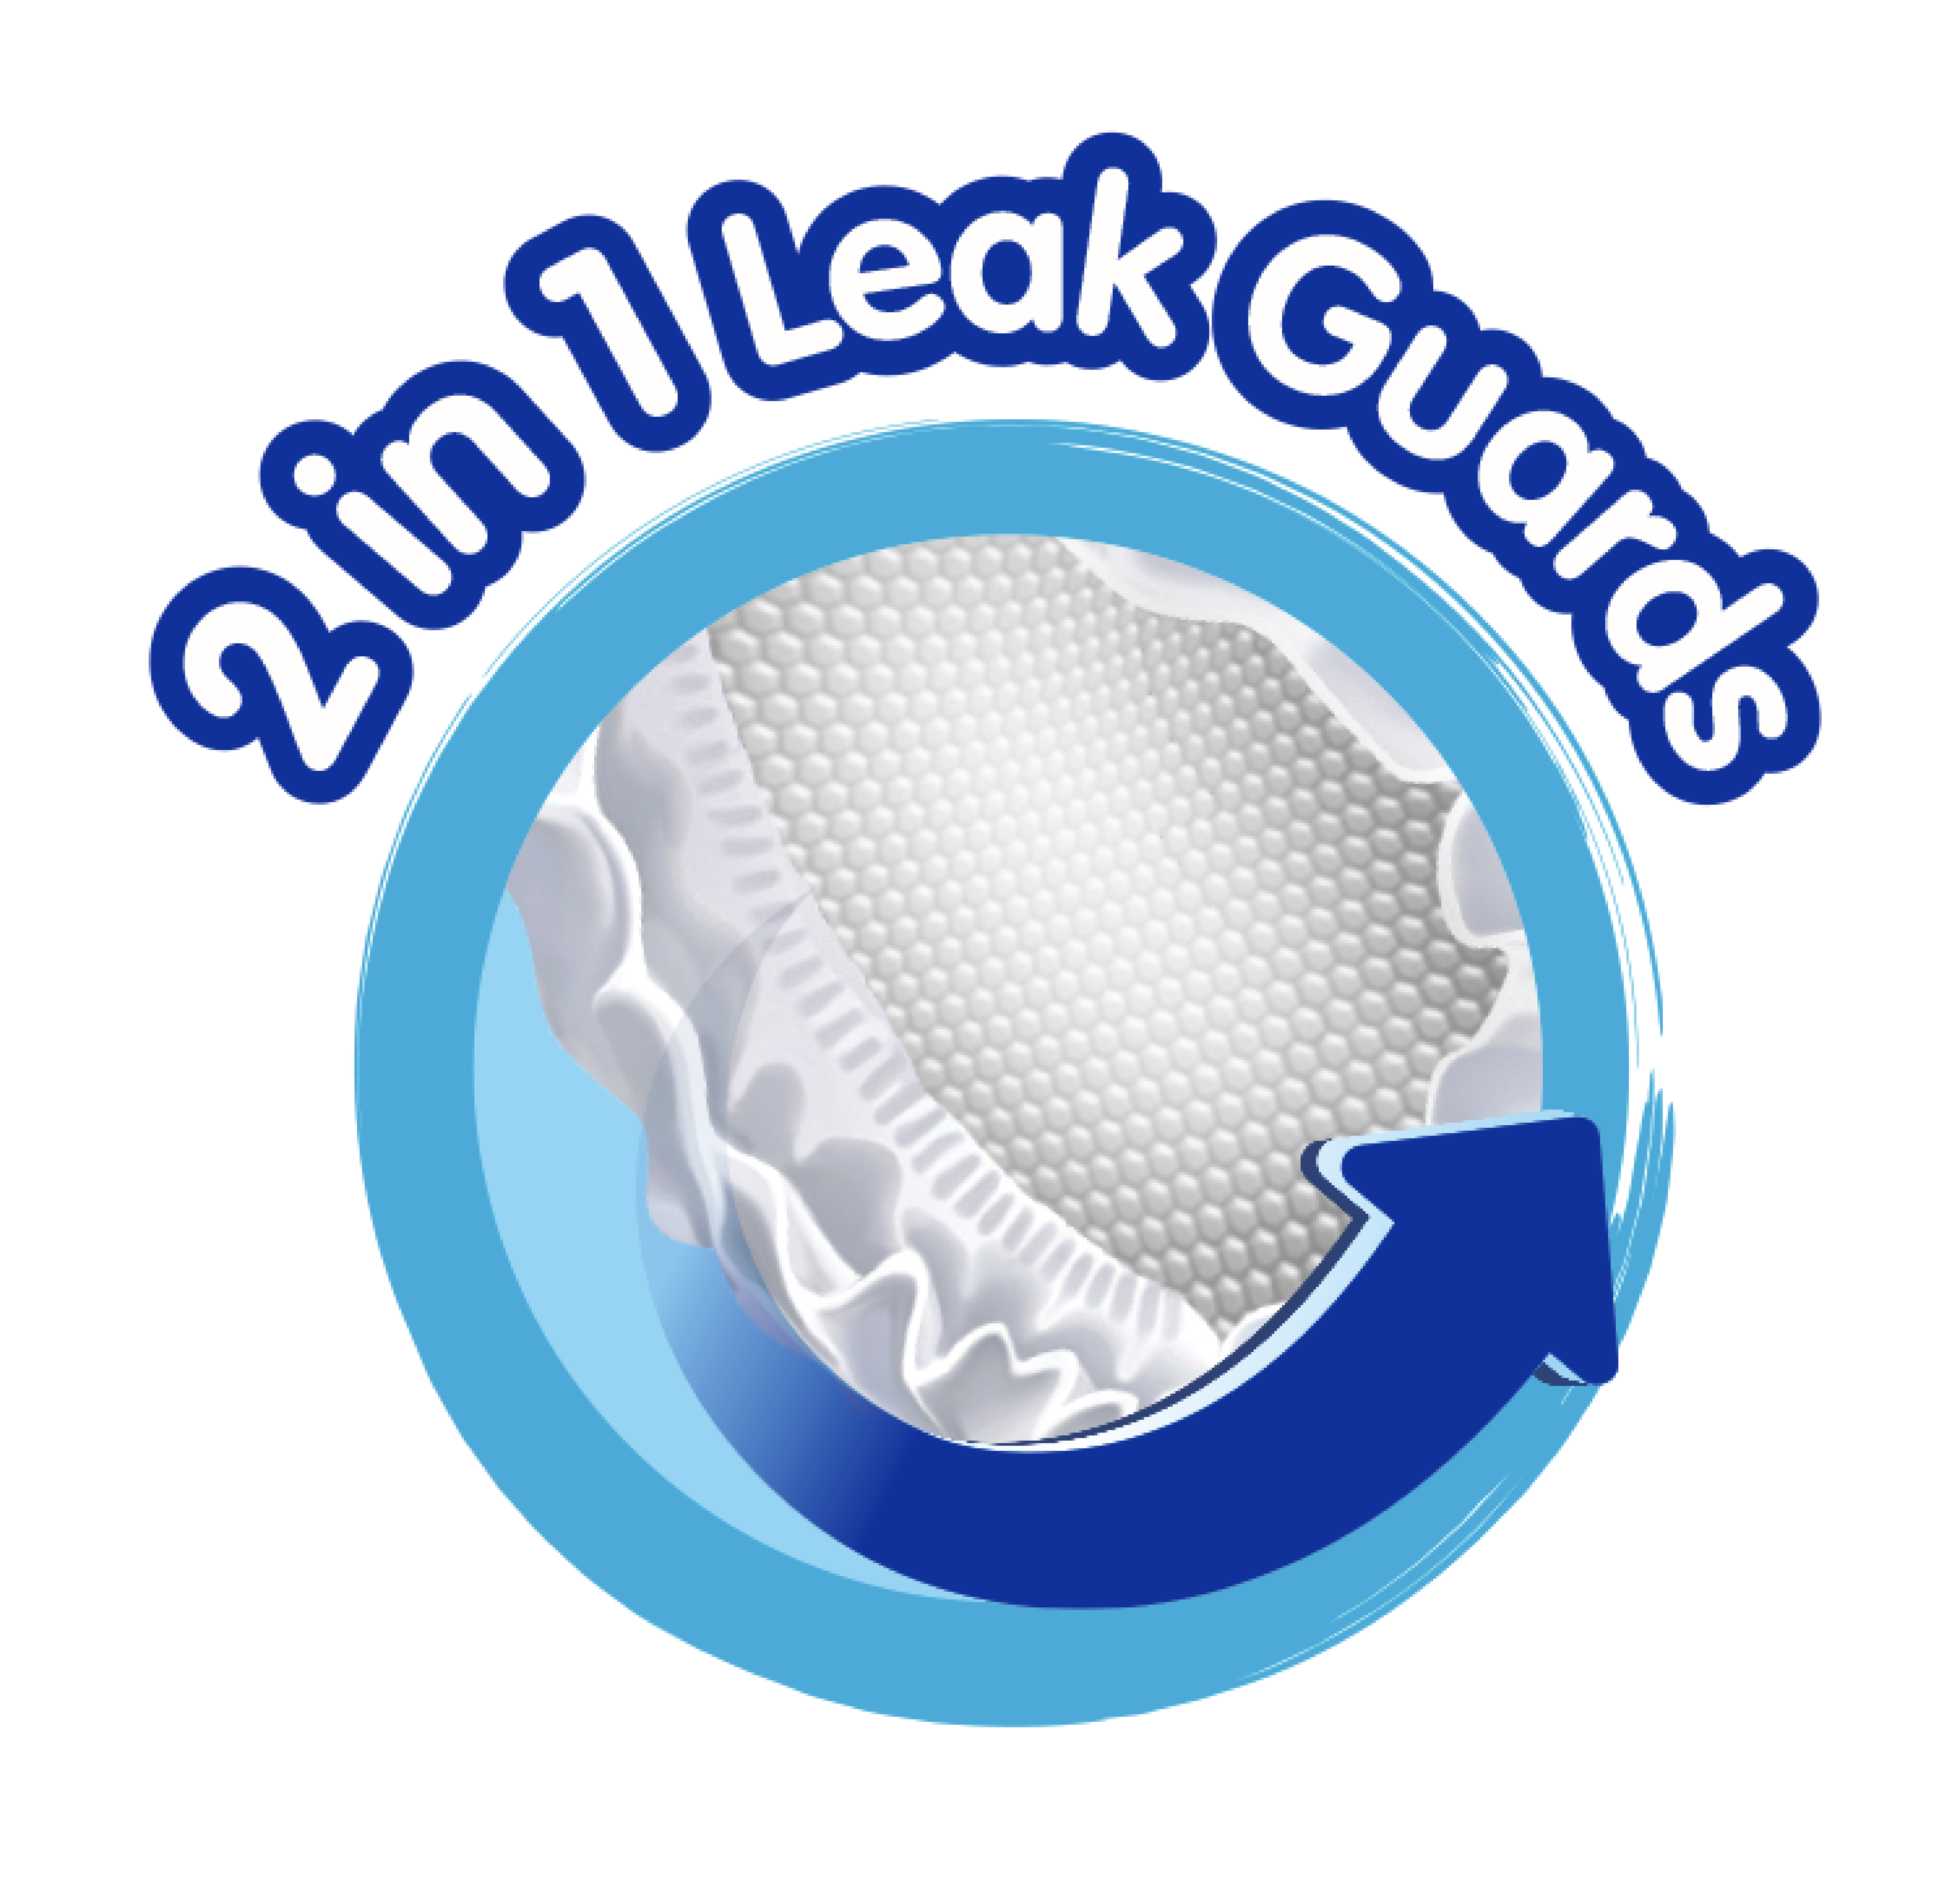 2 in 1 Leak Guards